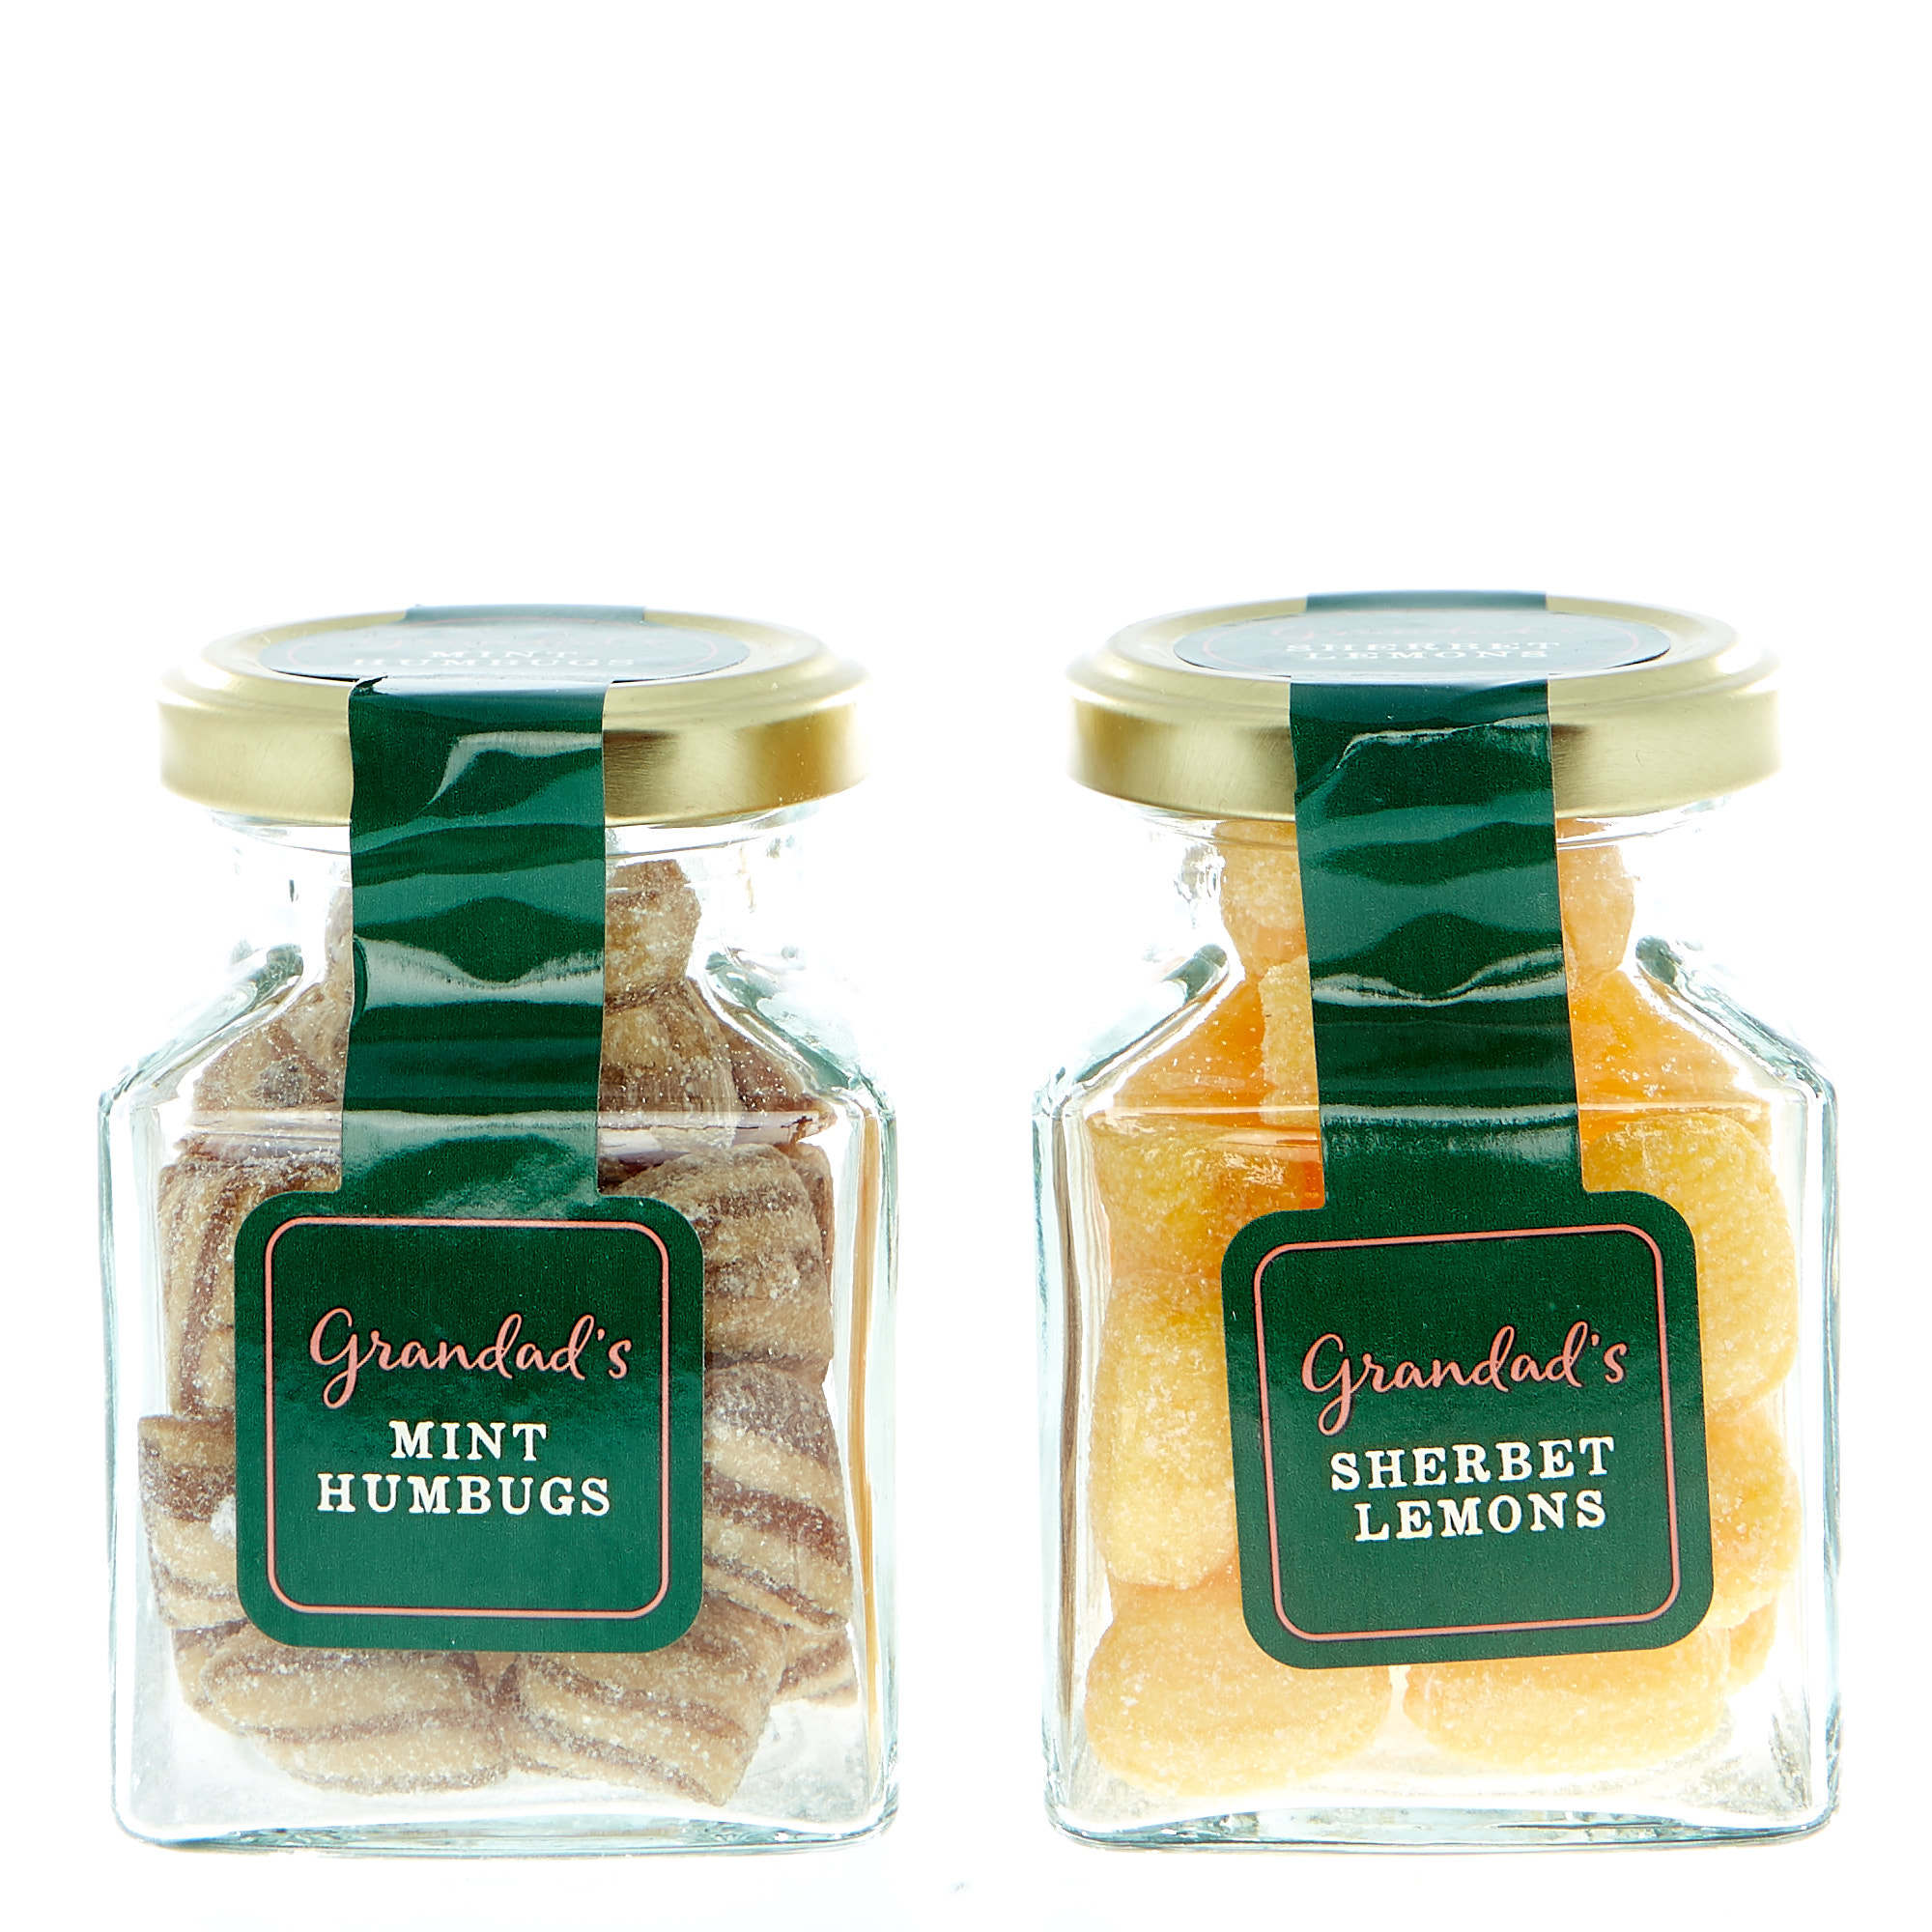 Grandad Mint Humbugs & Sherbet Lemon Sweets 